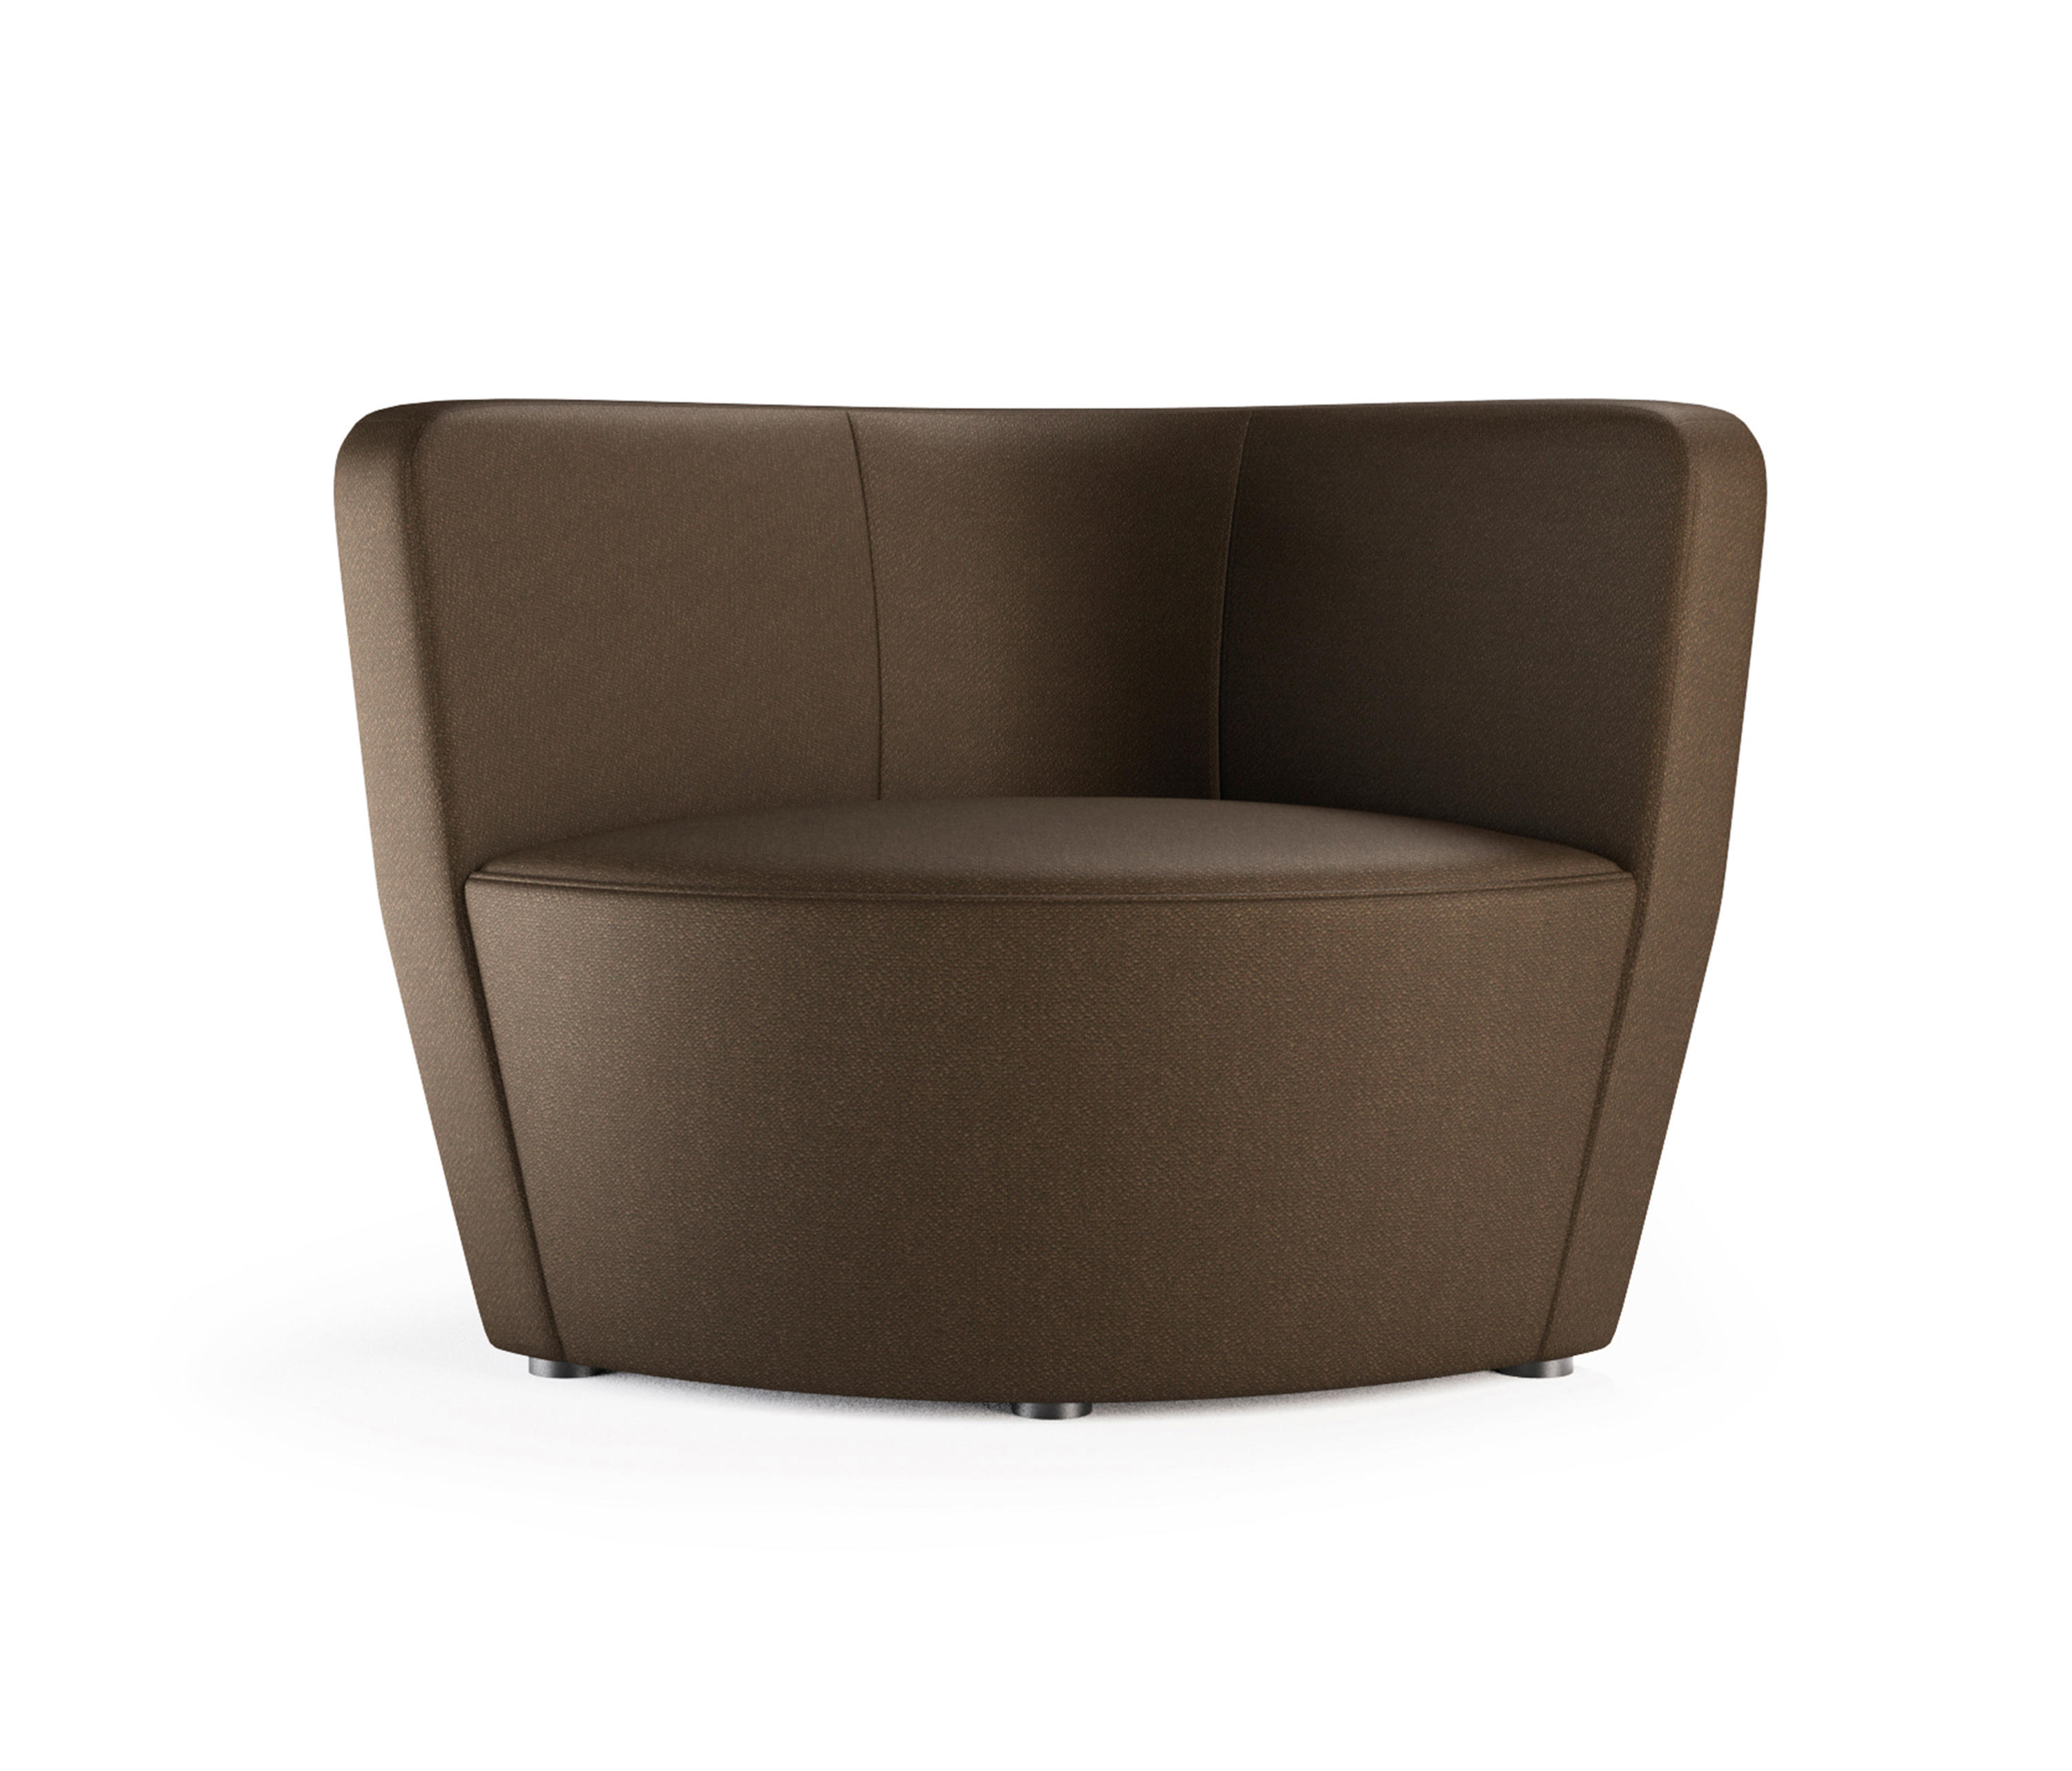 Cahoots 9001 Meet & designer furniture | Architonic